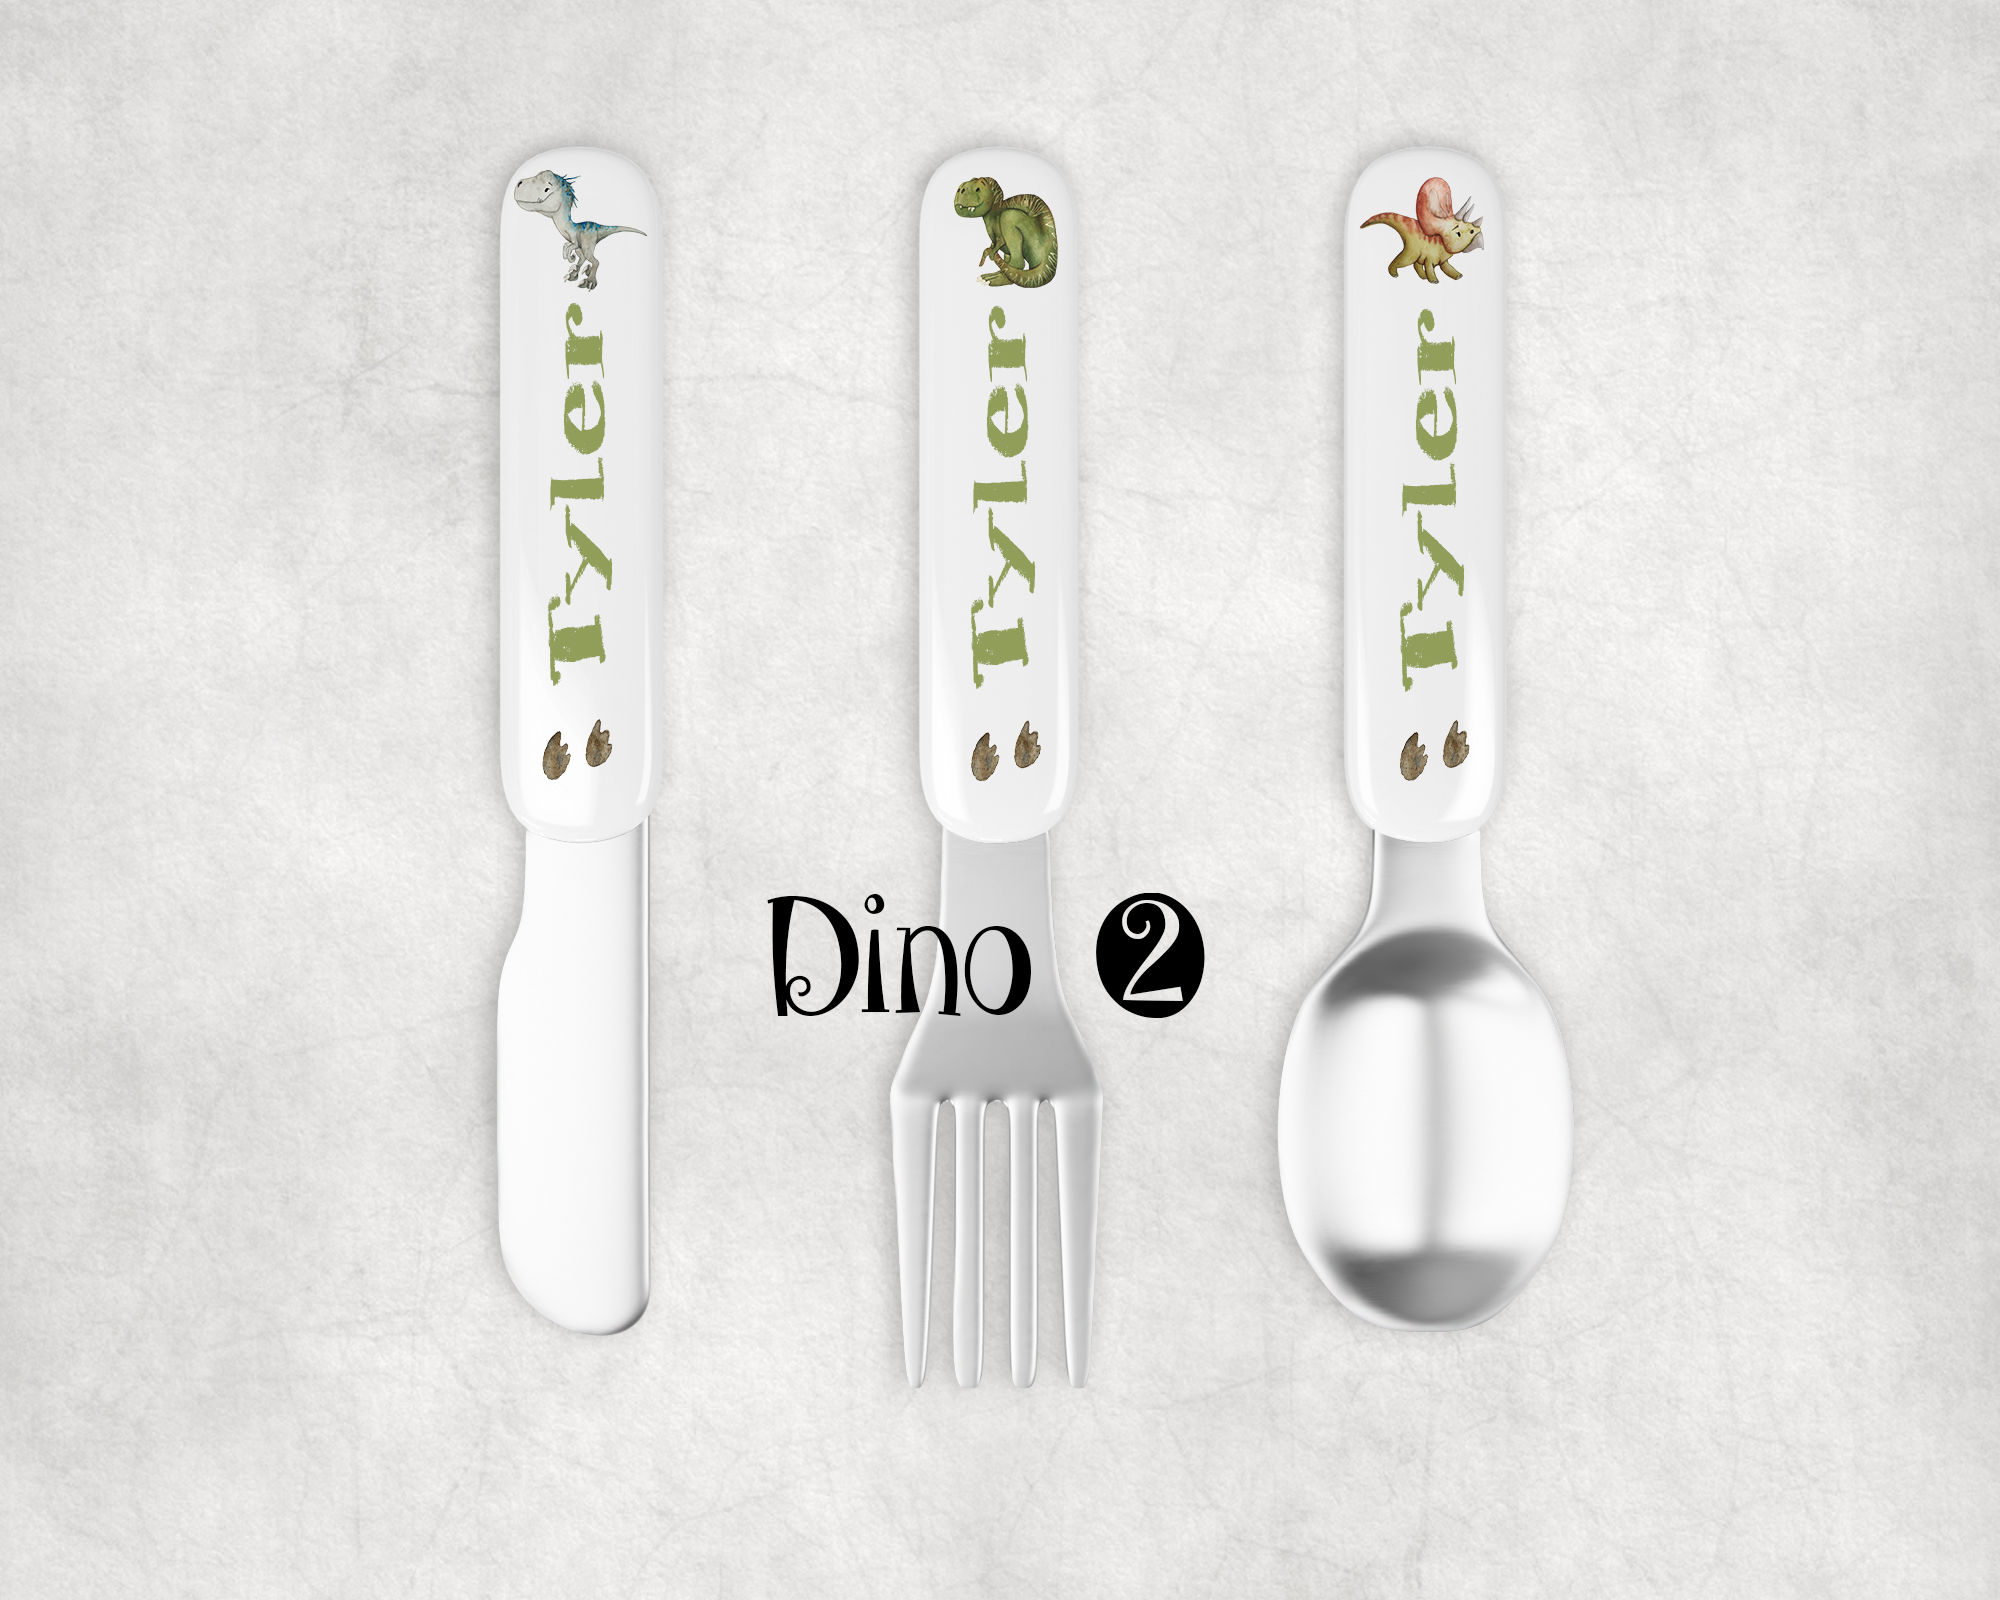 Children's personalised cutlery set in dinosaur design